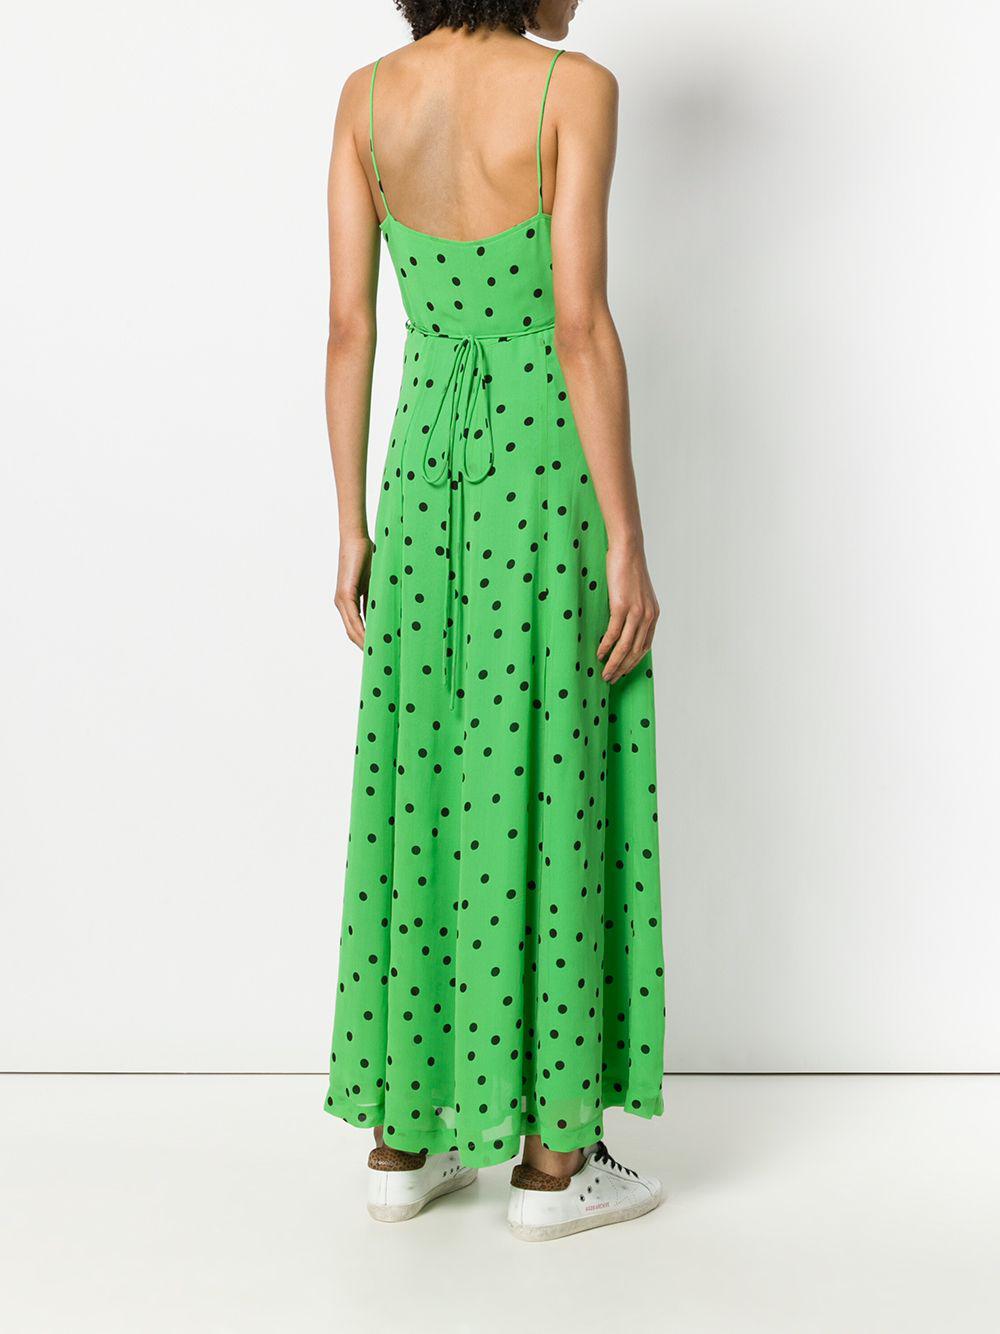 Ganni Polka-dot Flared Maxi Dress in Green - Lyst